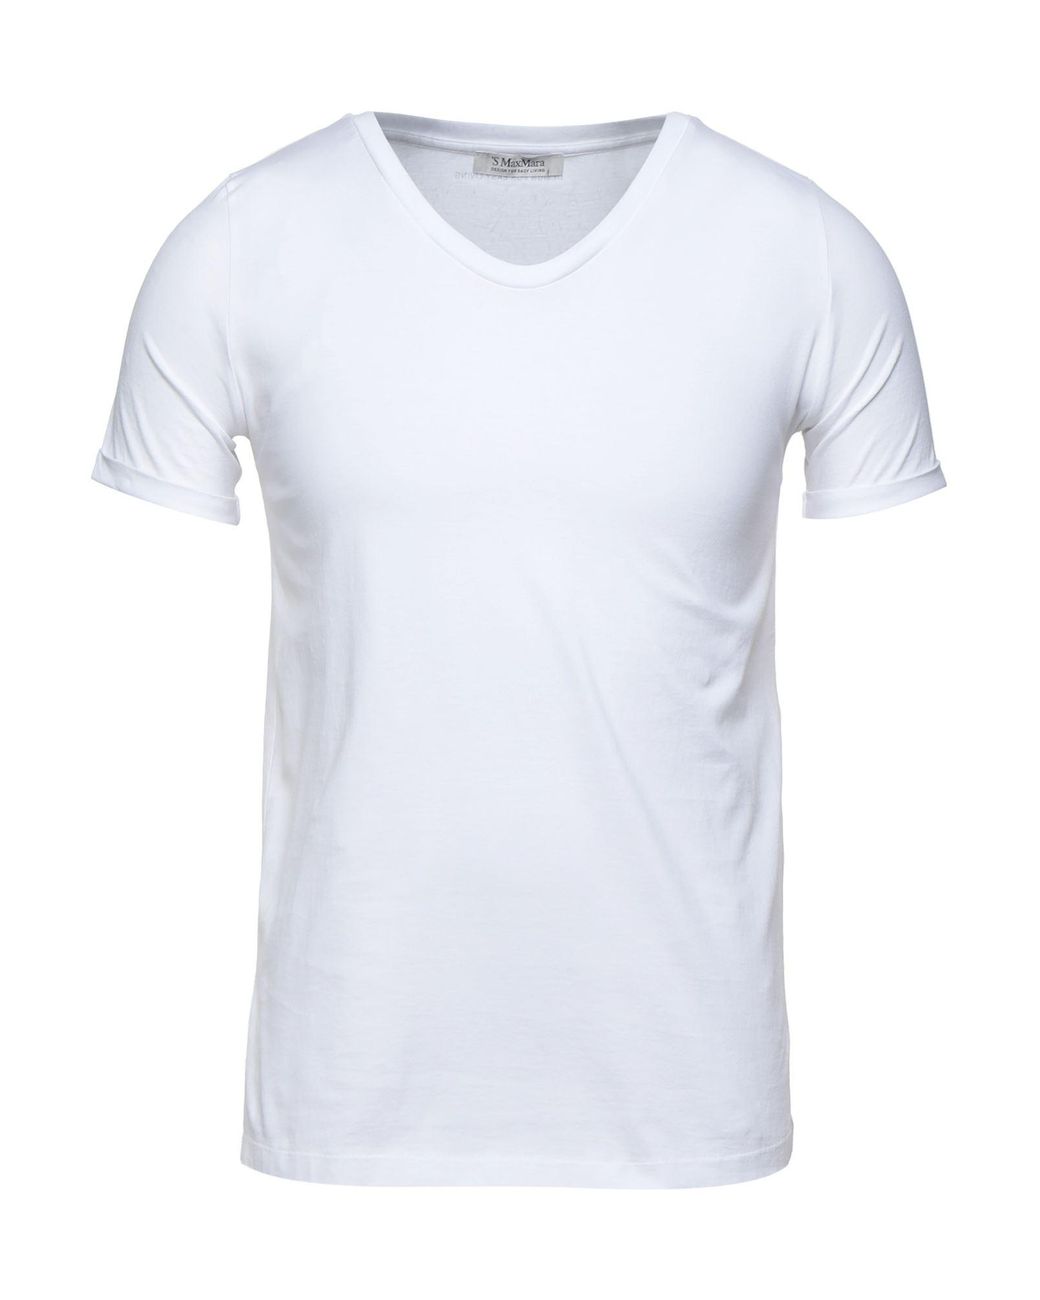 Max Mara Cotton T-shirt in White for Men - Lyst